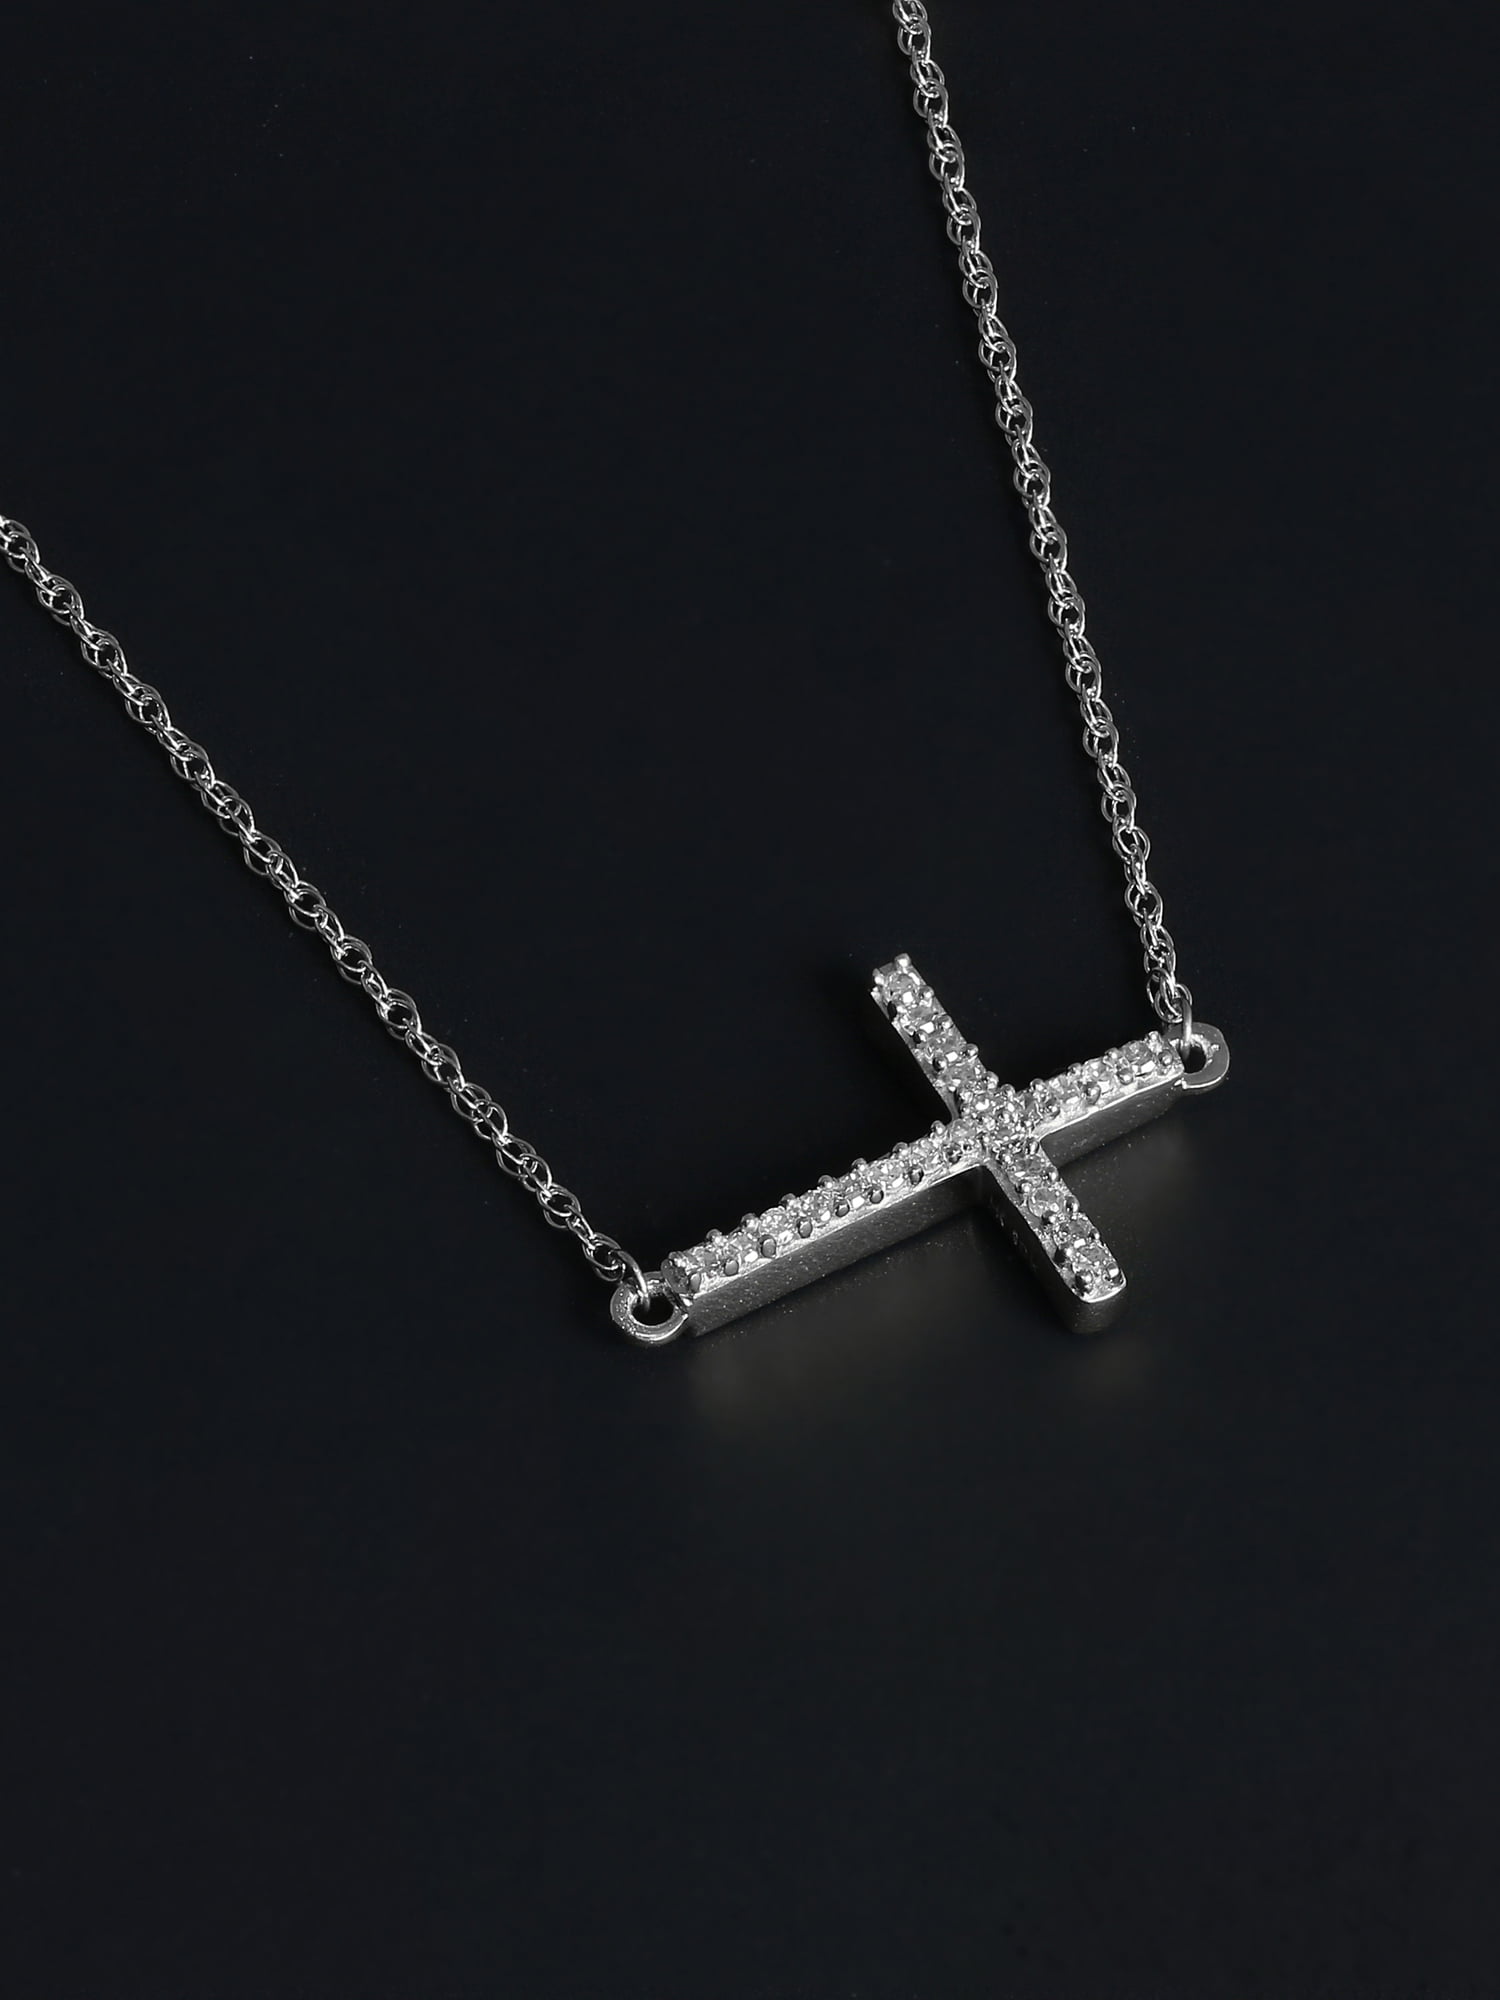 Buy Stylish Side Cross Necklace Online - Adorn512 – adorn512